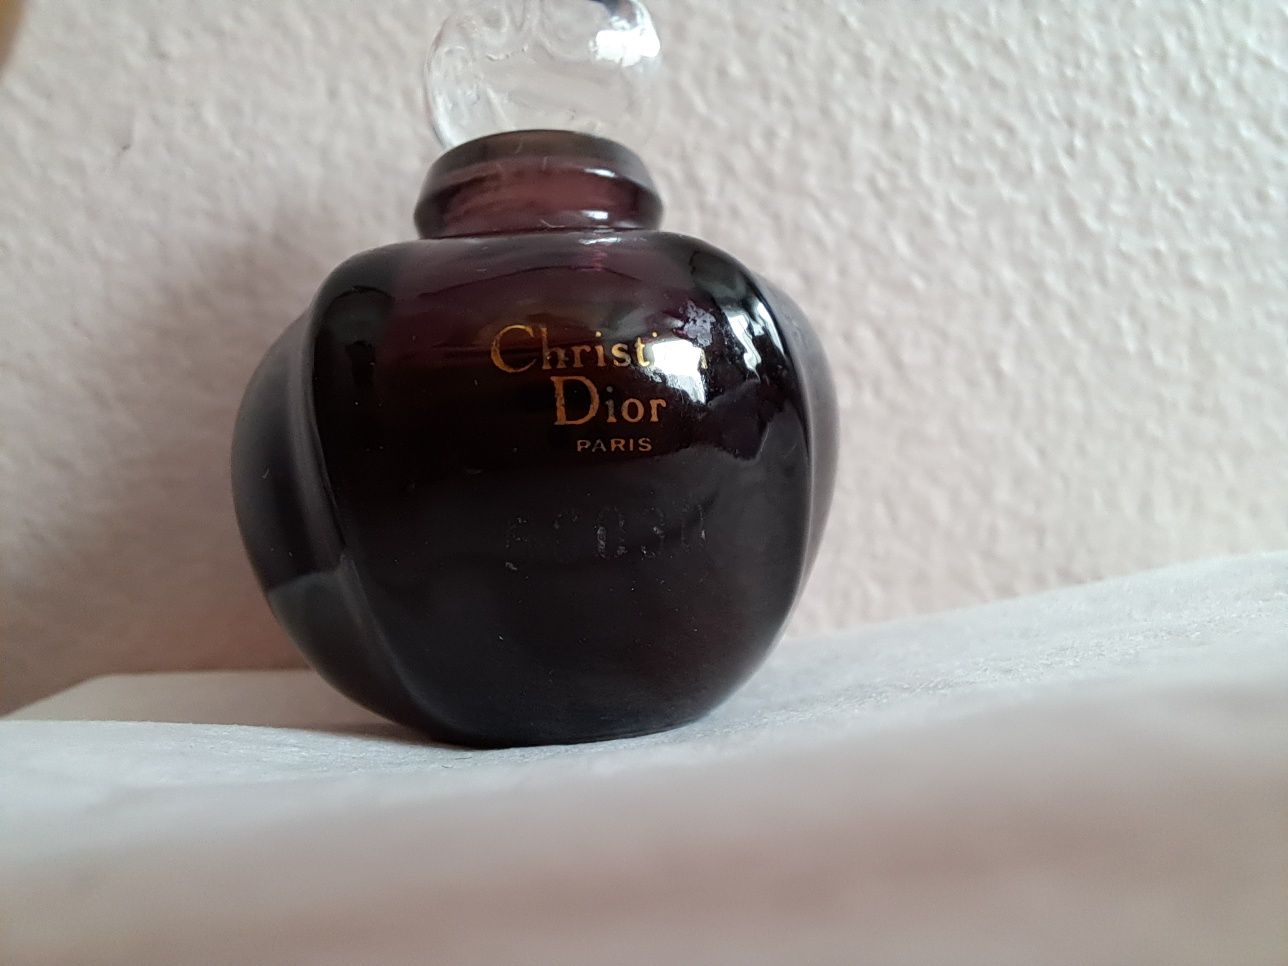 Dior Poison Esprit de Parfum 5 ml miniaturka unikat